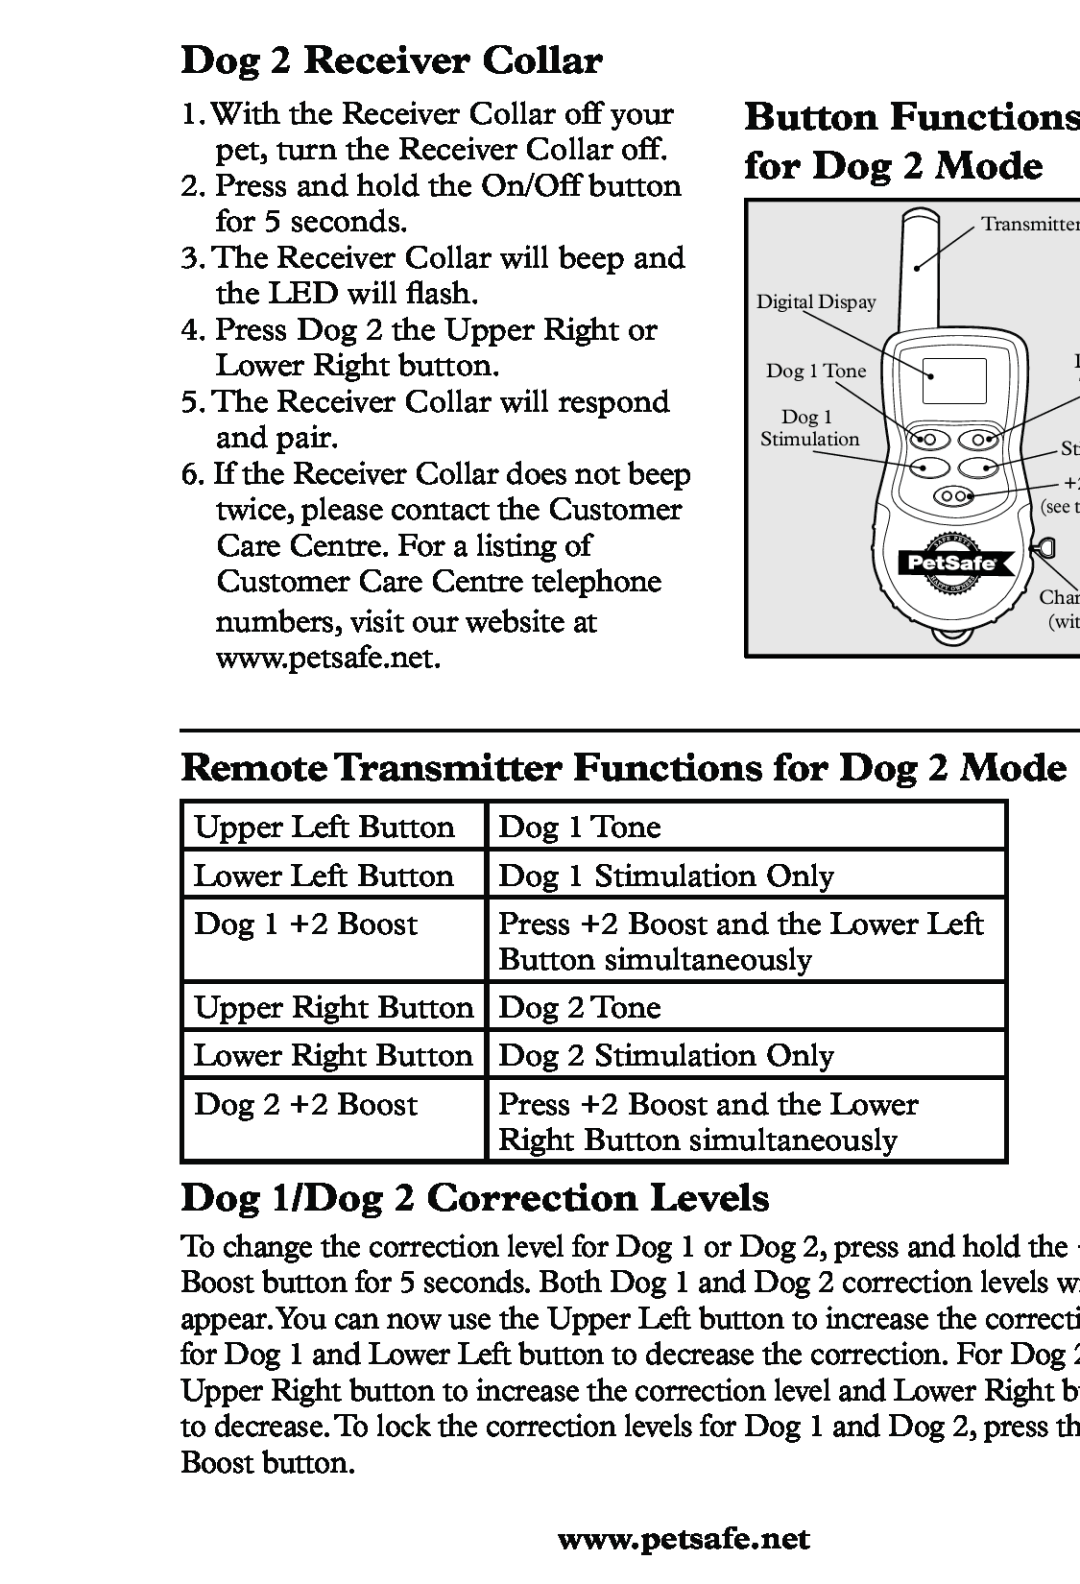 Petsafe PDT20-11939 Dog 2 Receiver Collar, Button Functions for Dog 2 Mode, Remote Transmitter Functions for Dog 2 Mode 